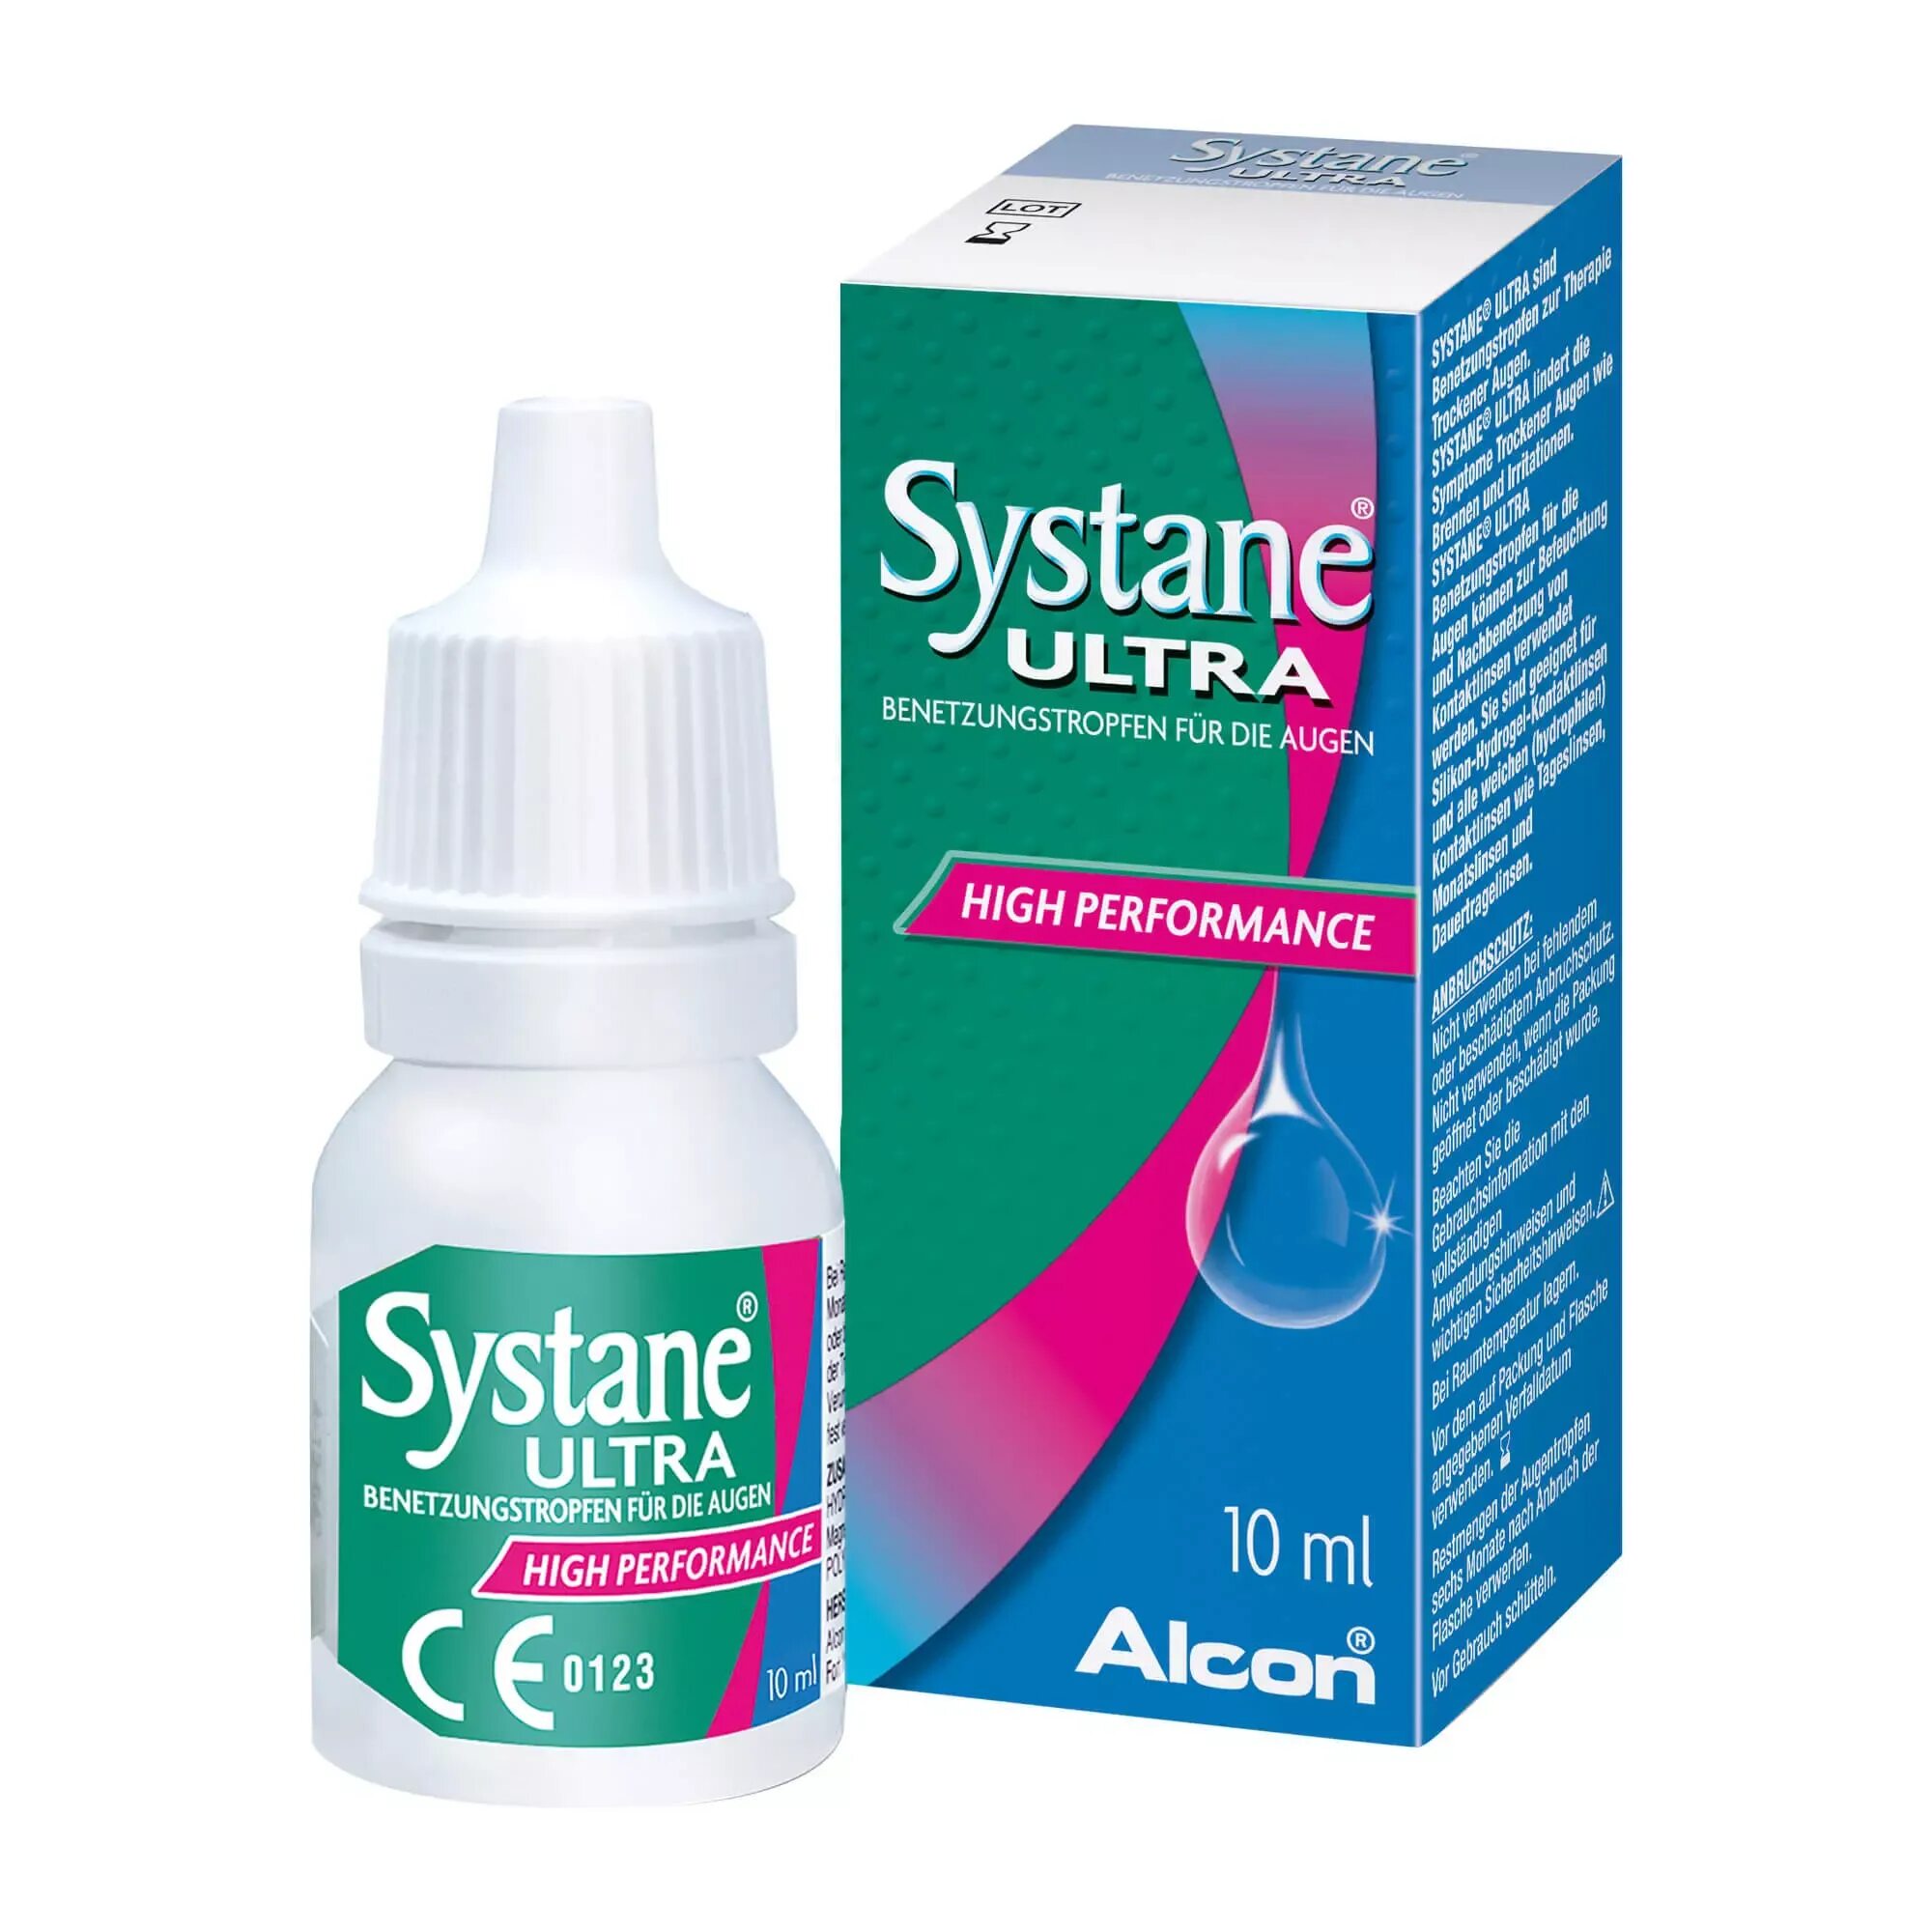 Systane Ultra капли 10 мл. Глазные капли увлажняющие Систейн ультра. Систейн ультра плюс капли глазные 10мл. Капля для глаз Systane Ultra.